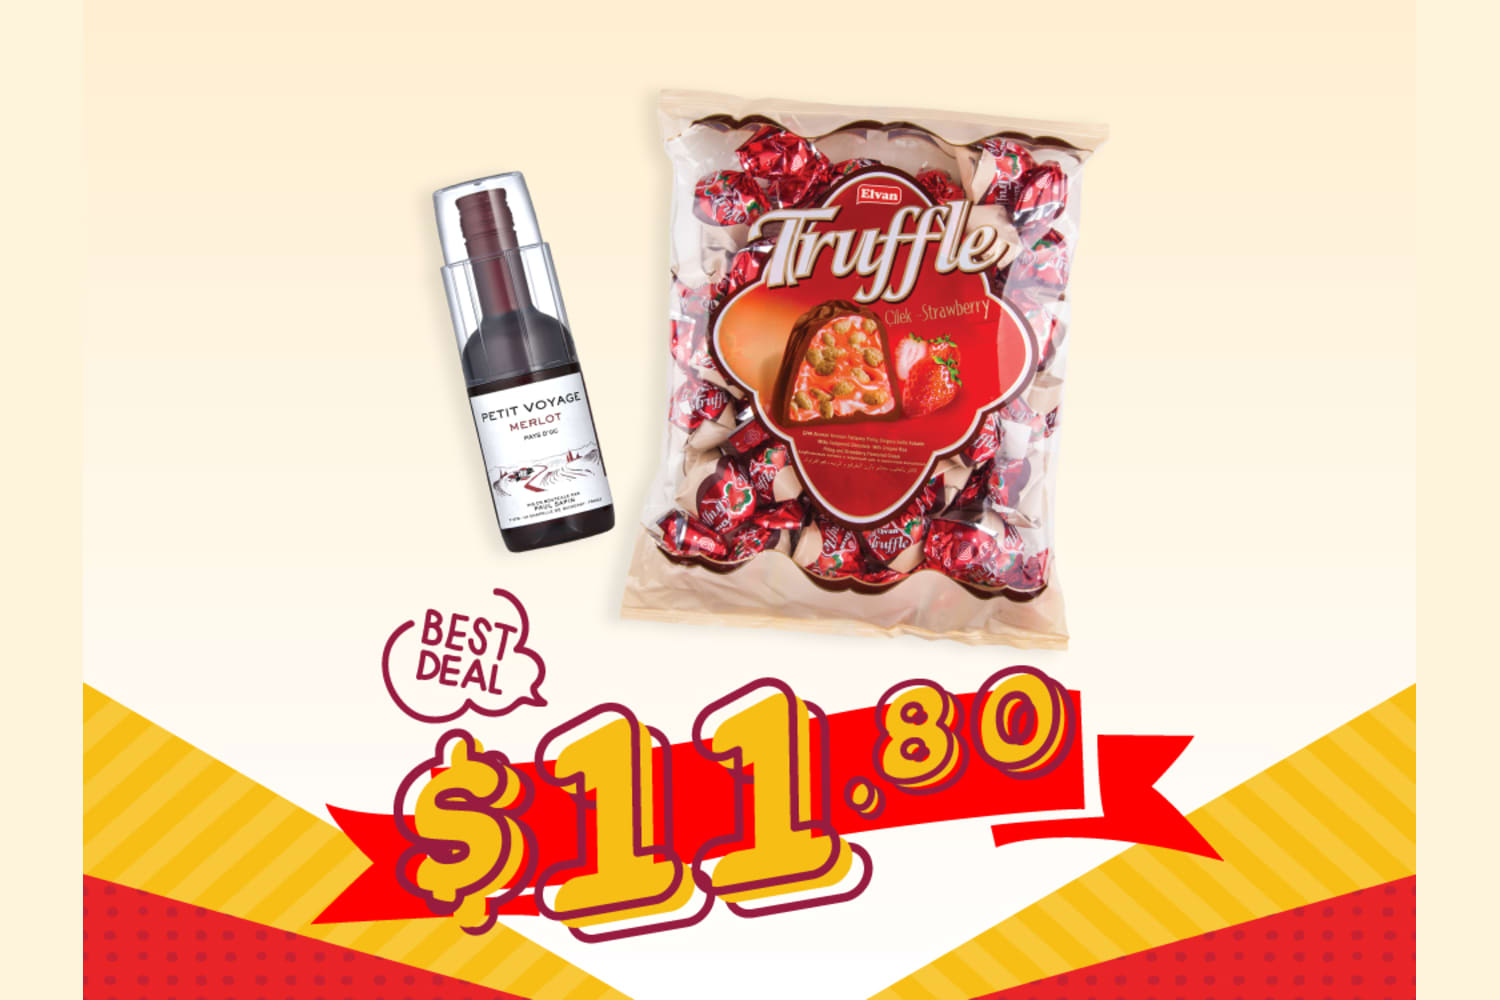 1 x Elvan Truffle Chocolate Bag & Red Wine Value Set - limited stock